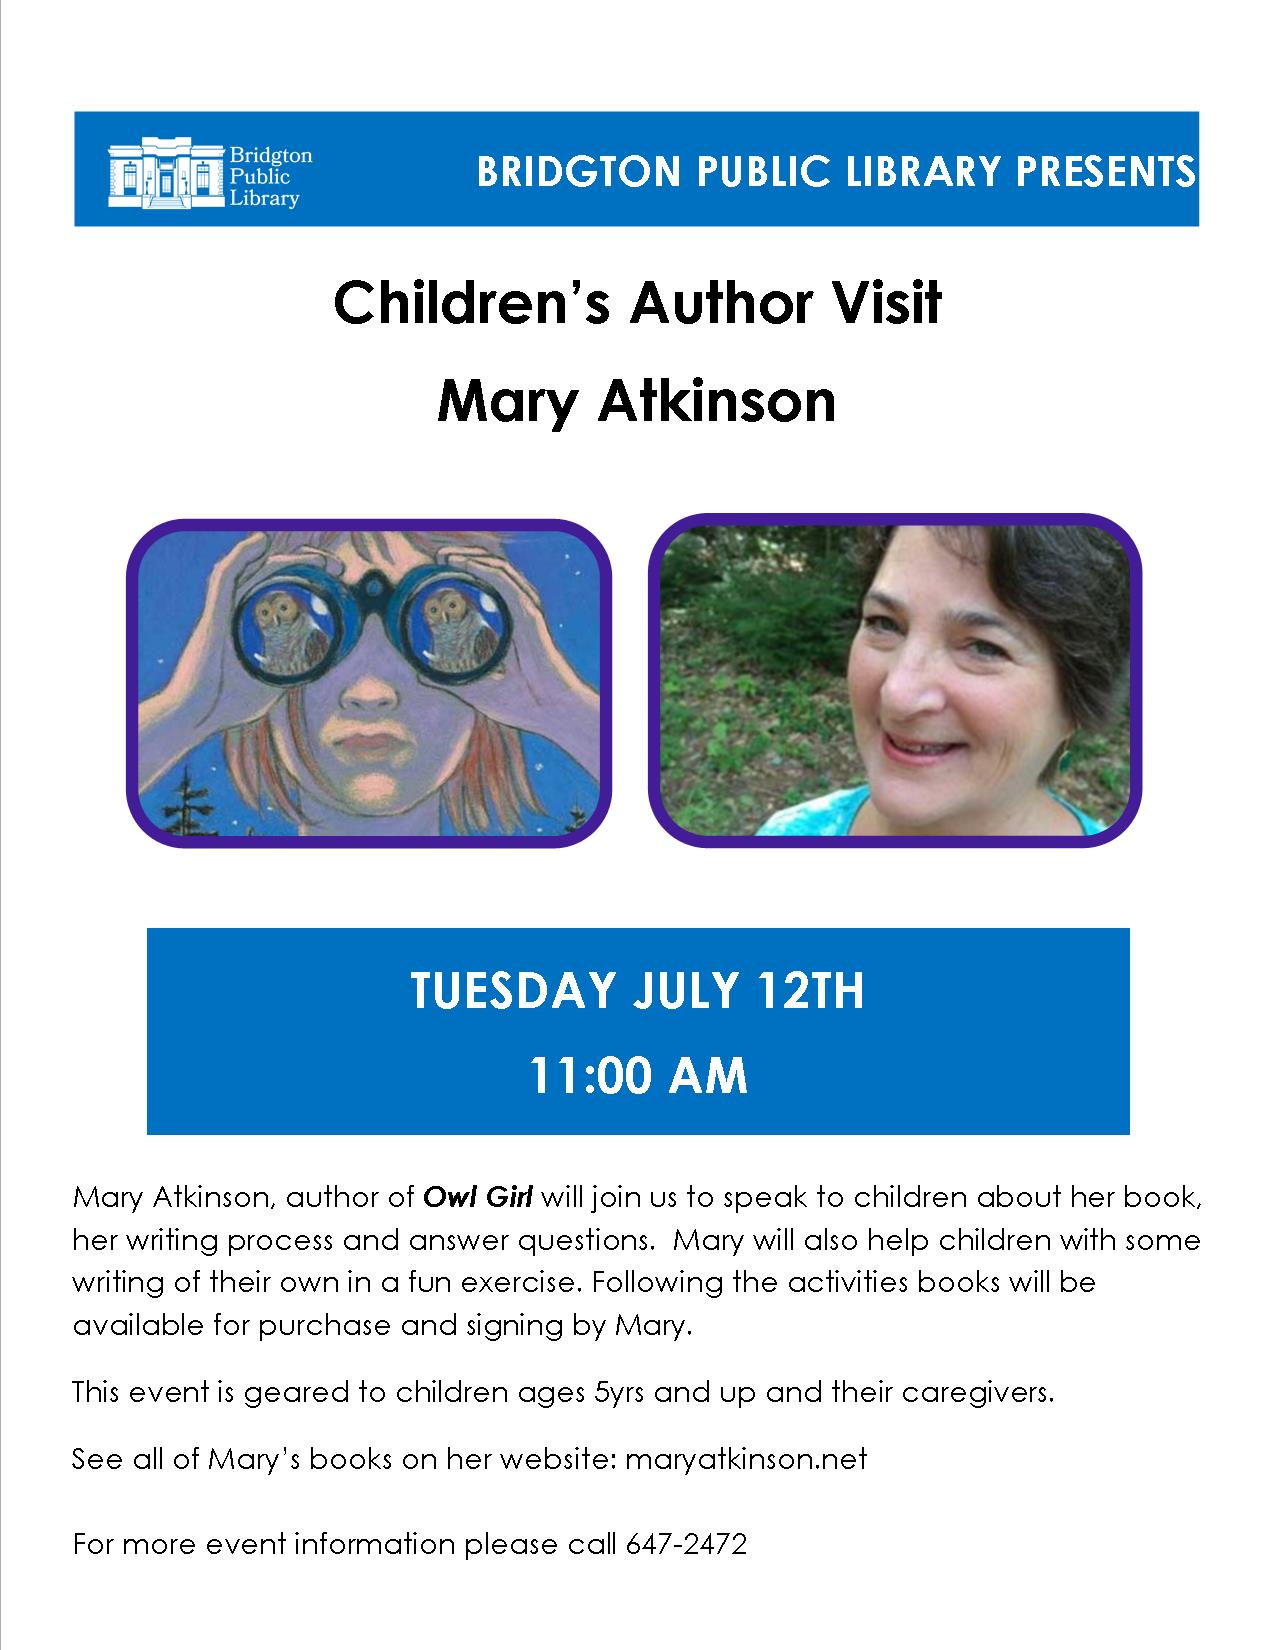 Children’s Author Visit: Mary Atkinson